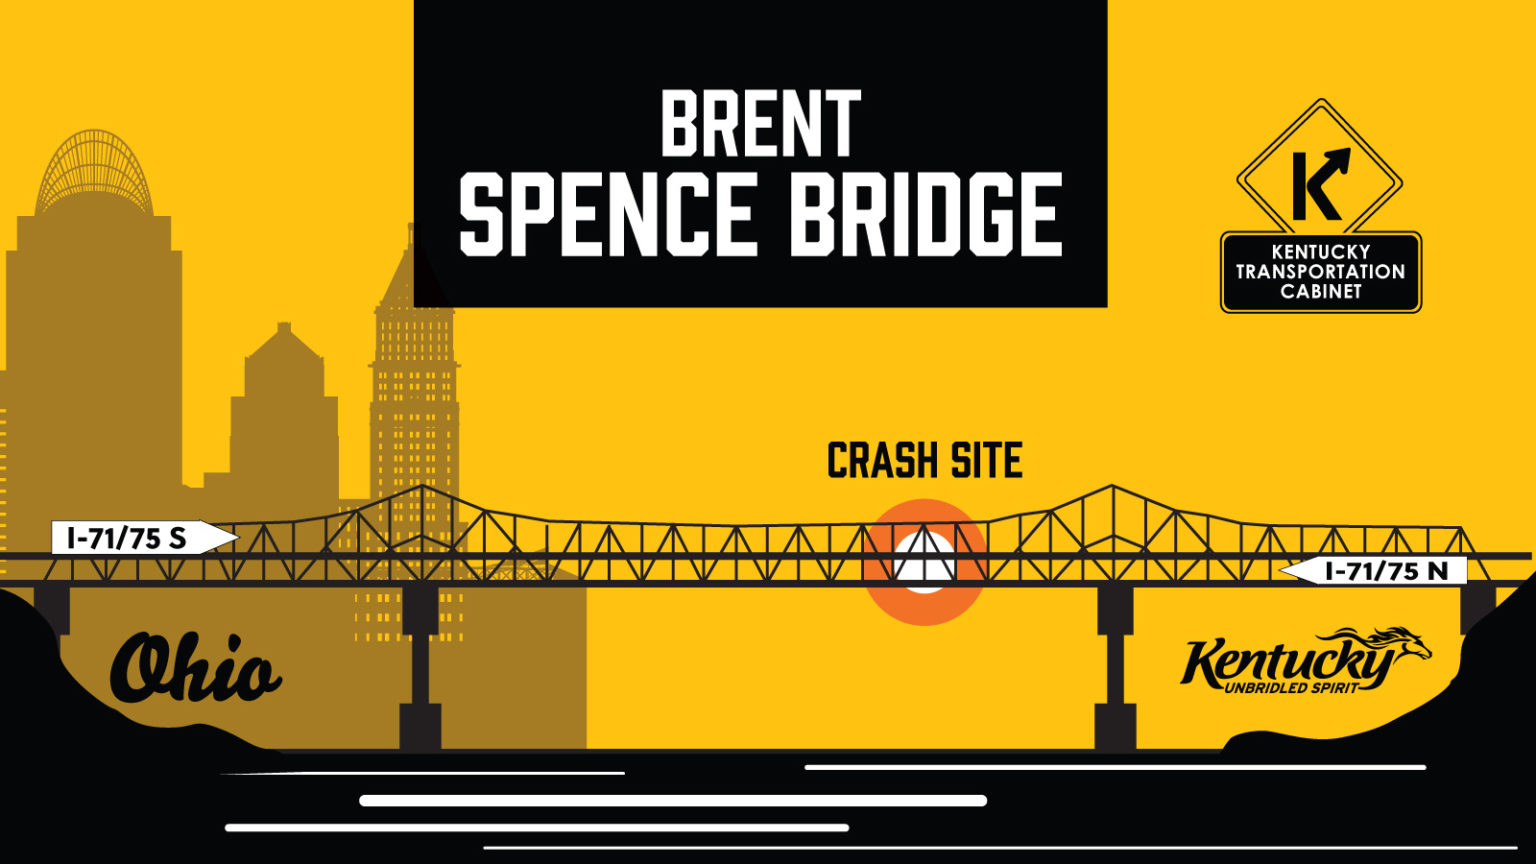 After 41 days of trucker traffic headaches, Kentucky/Ohio bridge to reopen